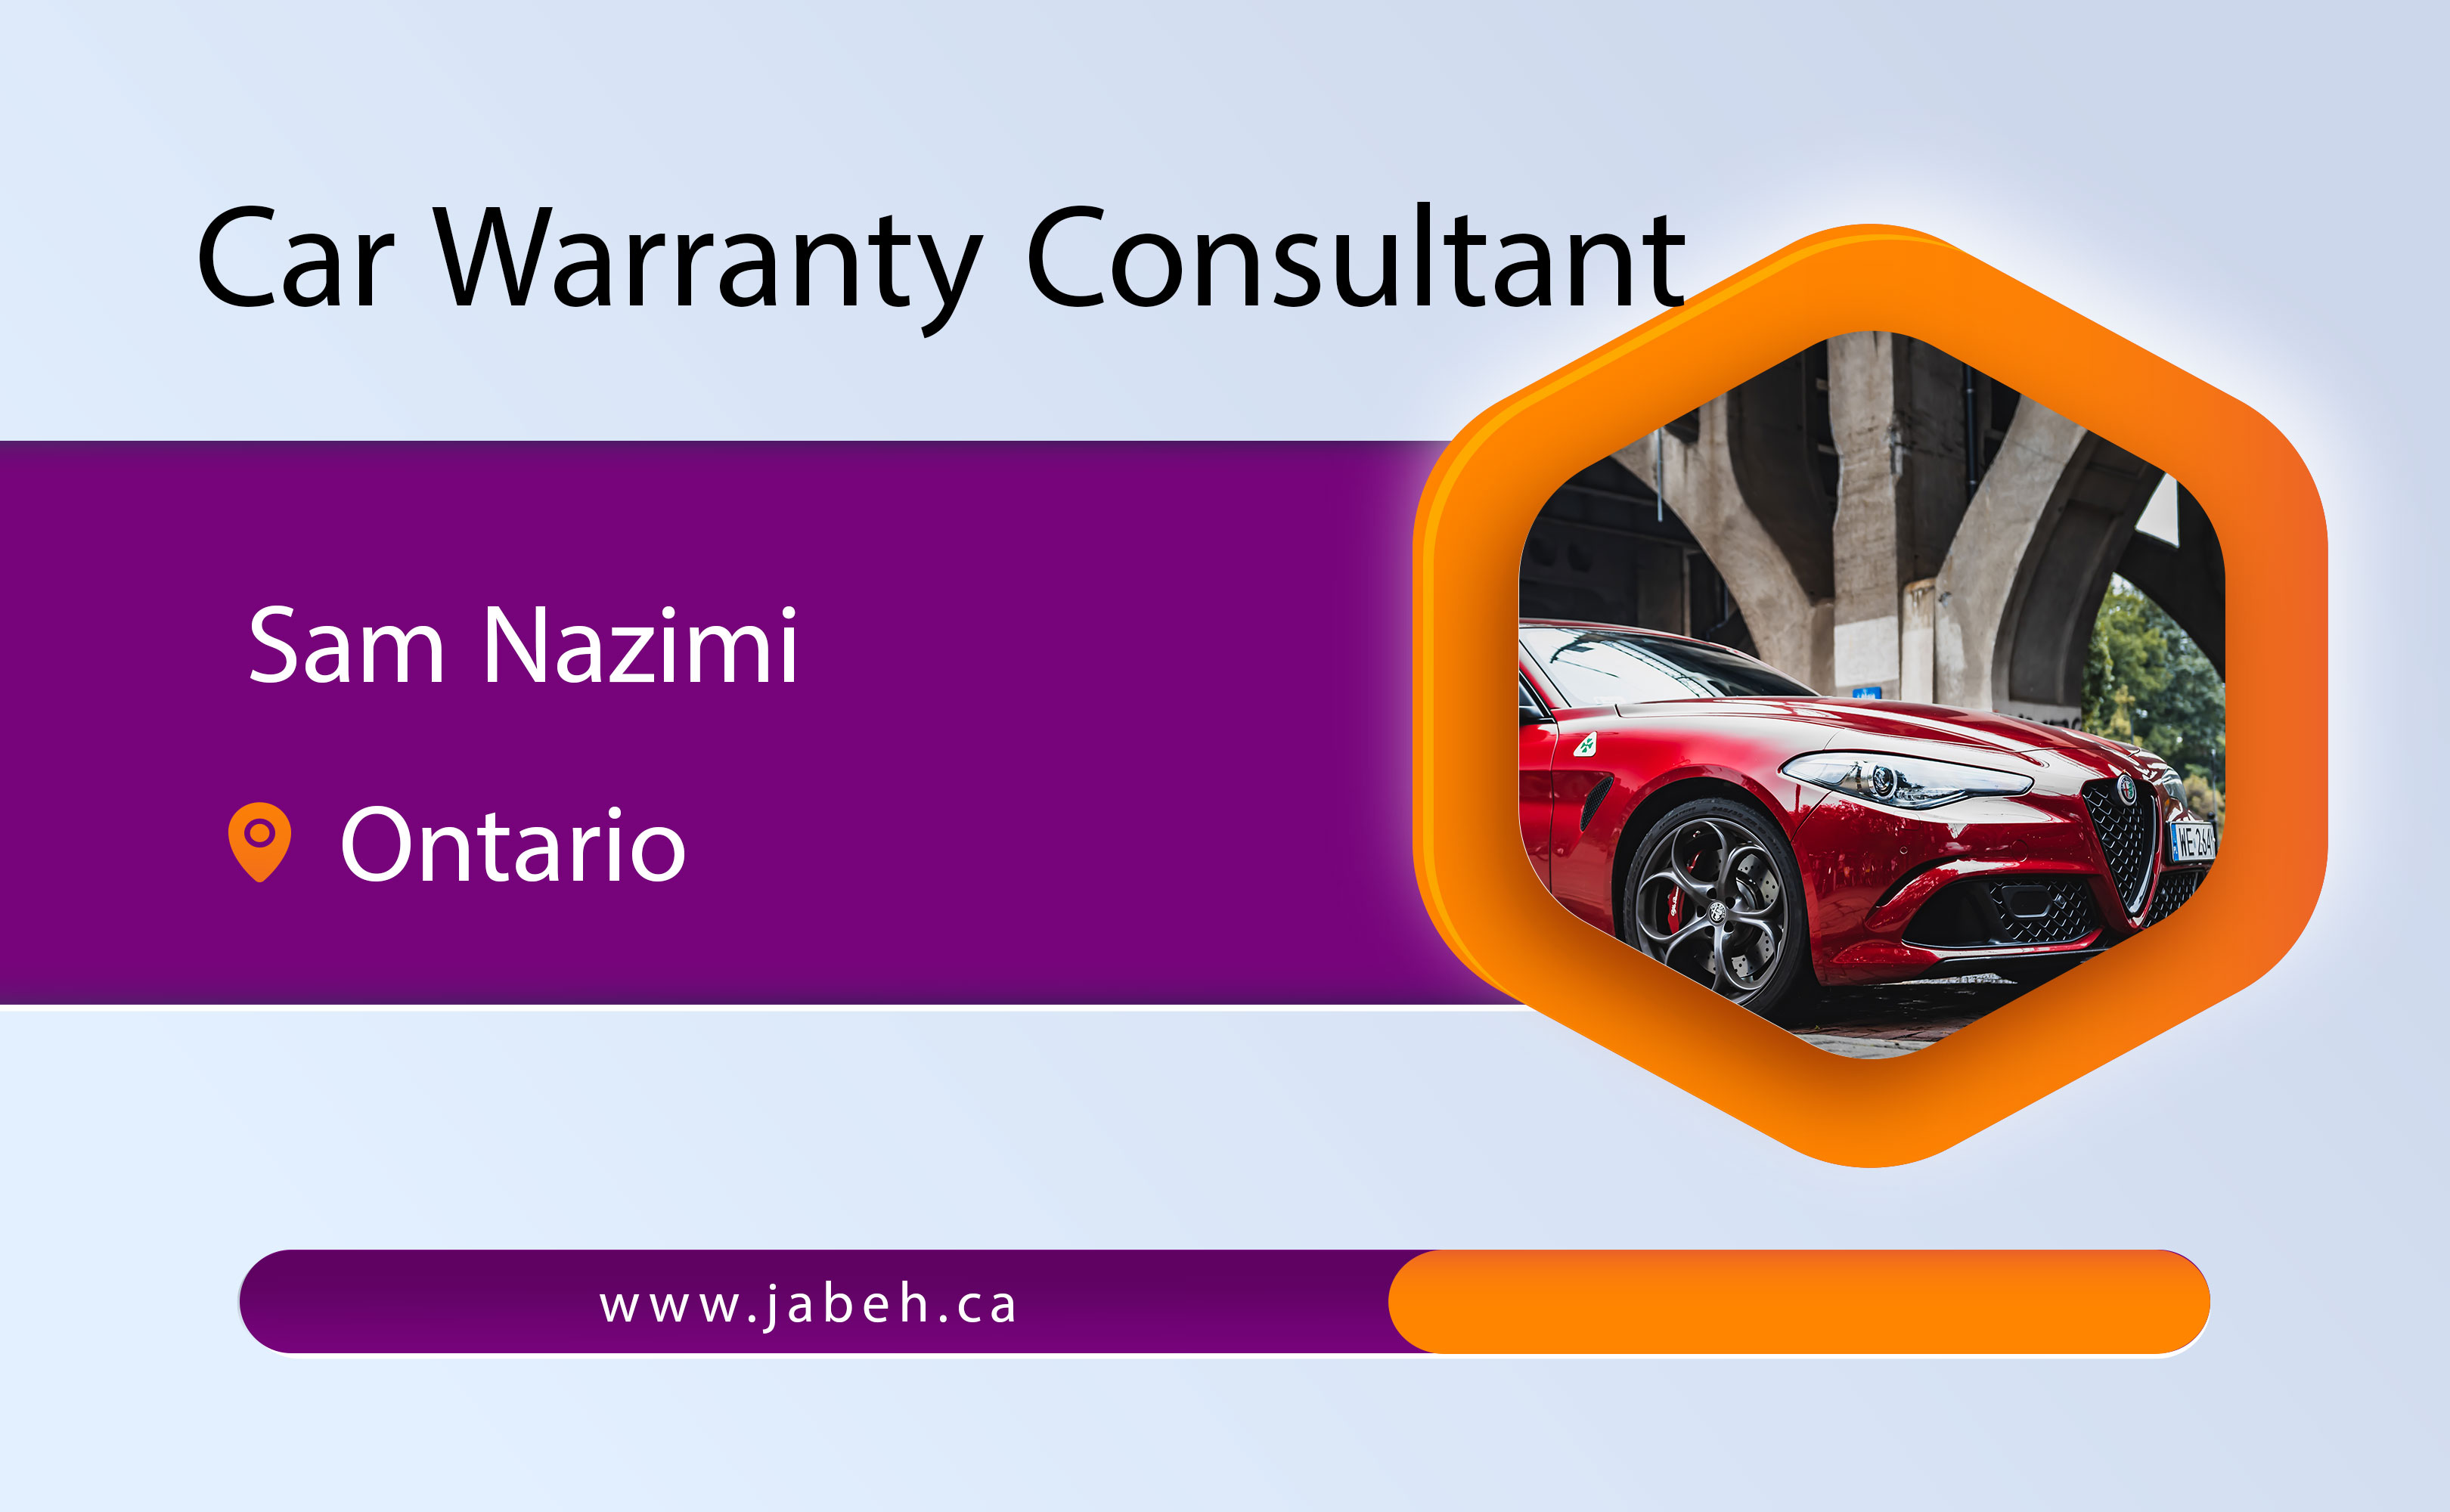 Iranian car warranty consultant Sam Nazimi in Ontario